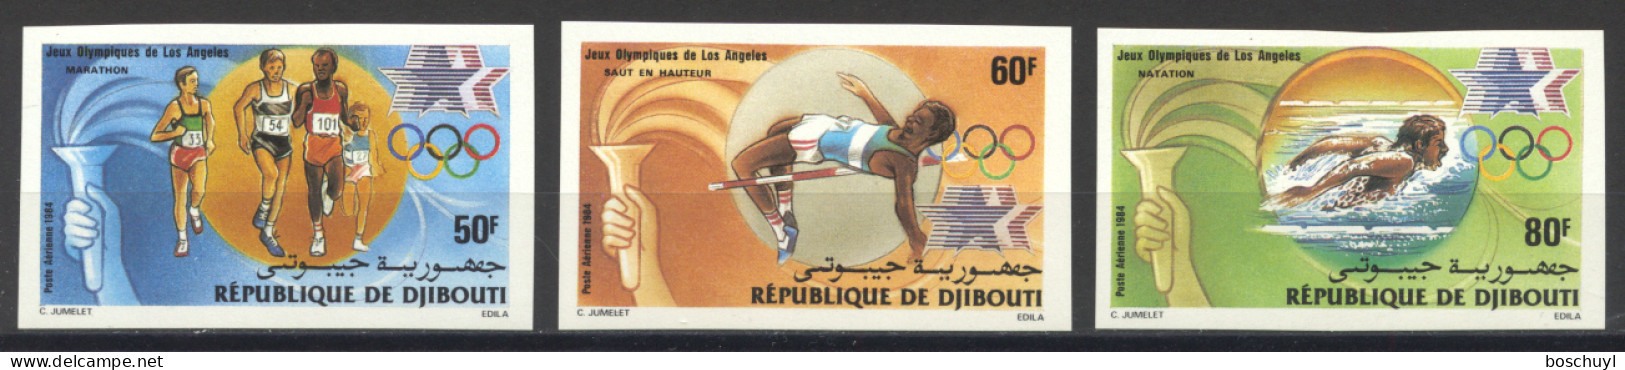 Djibouti, 1984, Olympic Summer Games Los Angeles, Marathon, High Jump, Swimming, Imperforated, MNH, Michel 409-411B - Djibouti (1977-...)